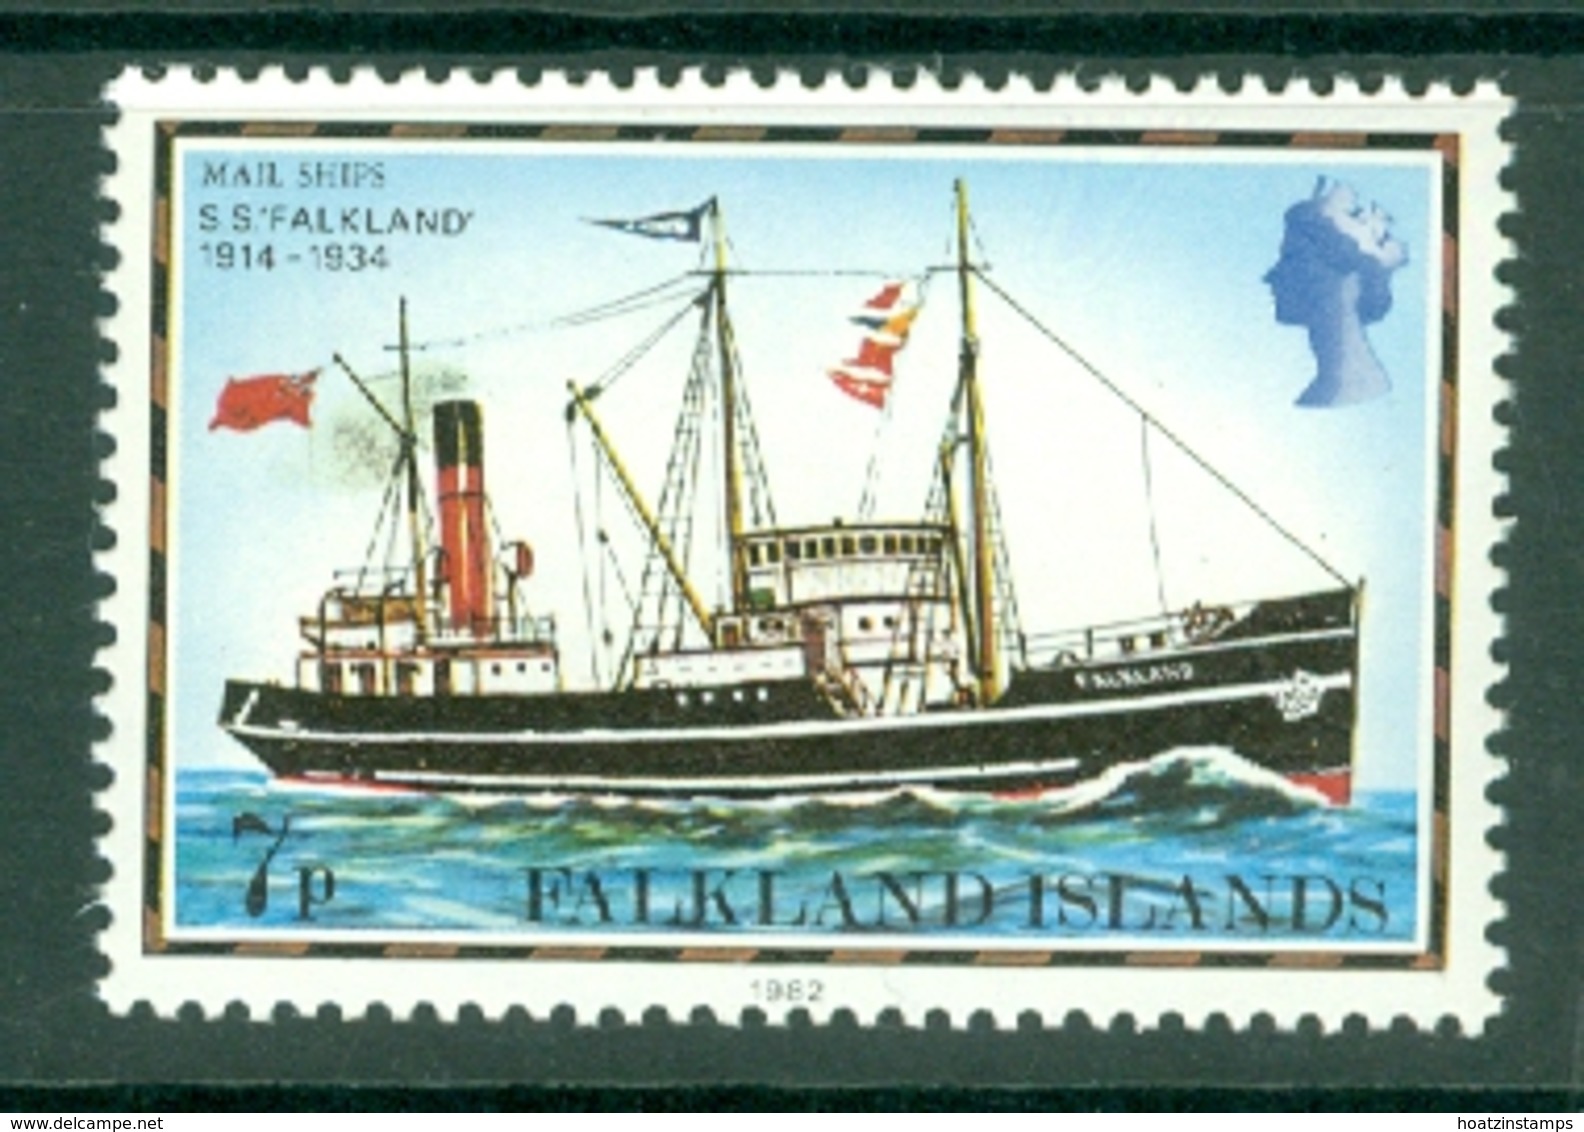 Falkland Is: 1982   Ships  SG337B    7p   ['1982' Imprint Date]    MNH - Falkland Islands